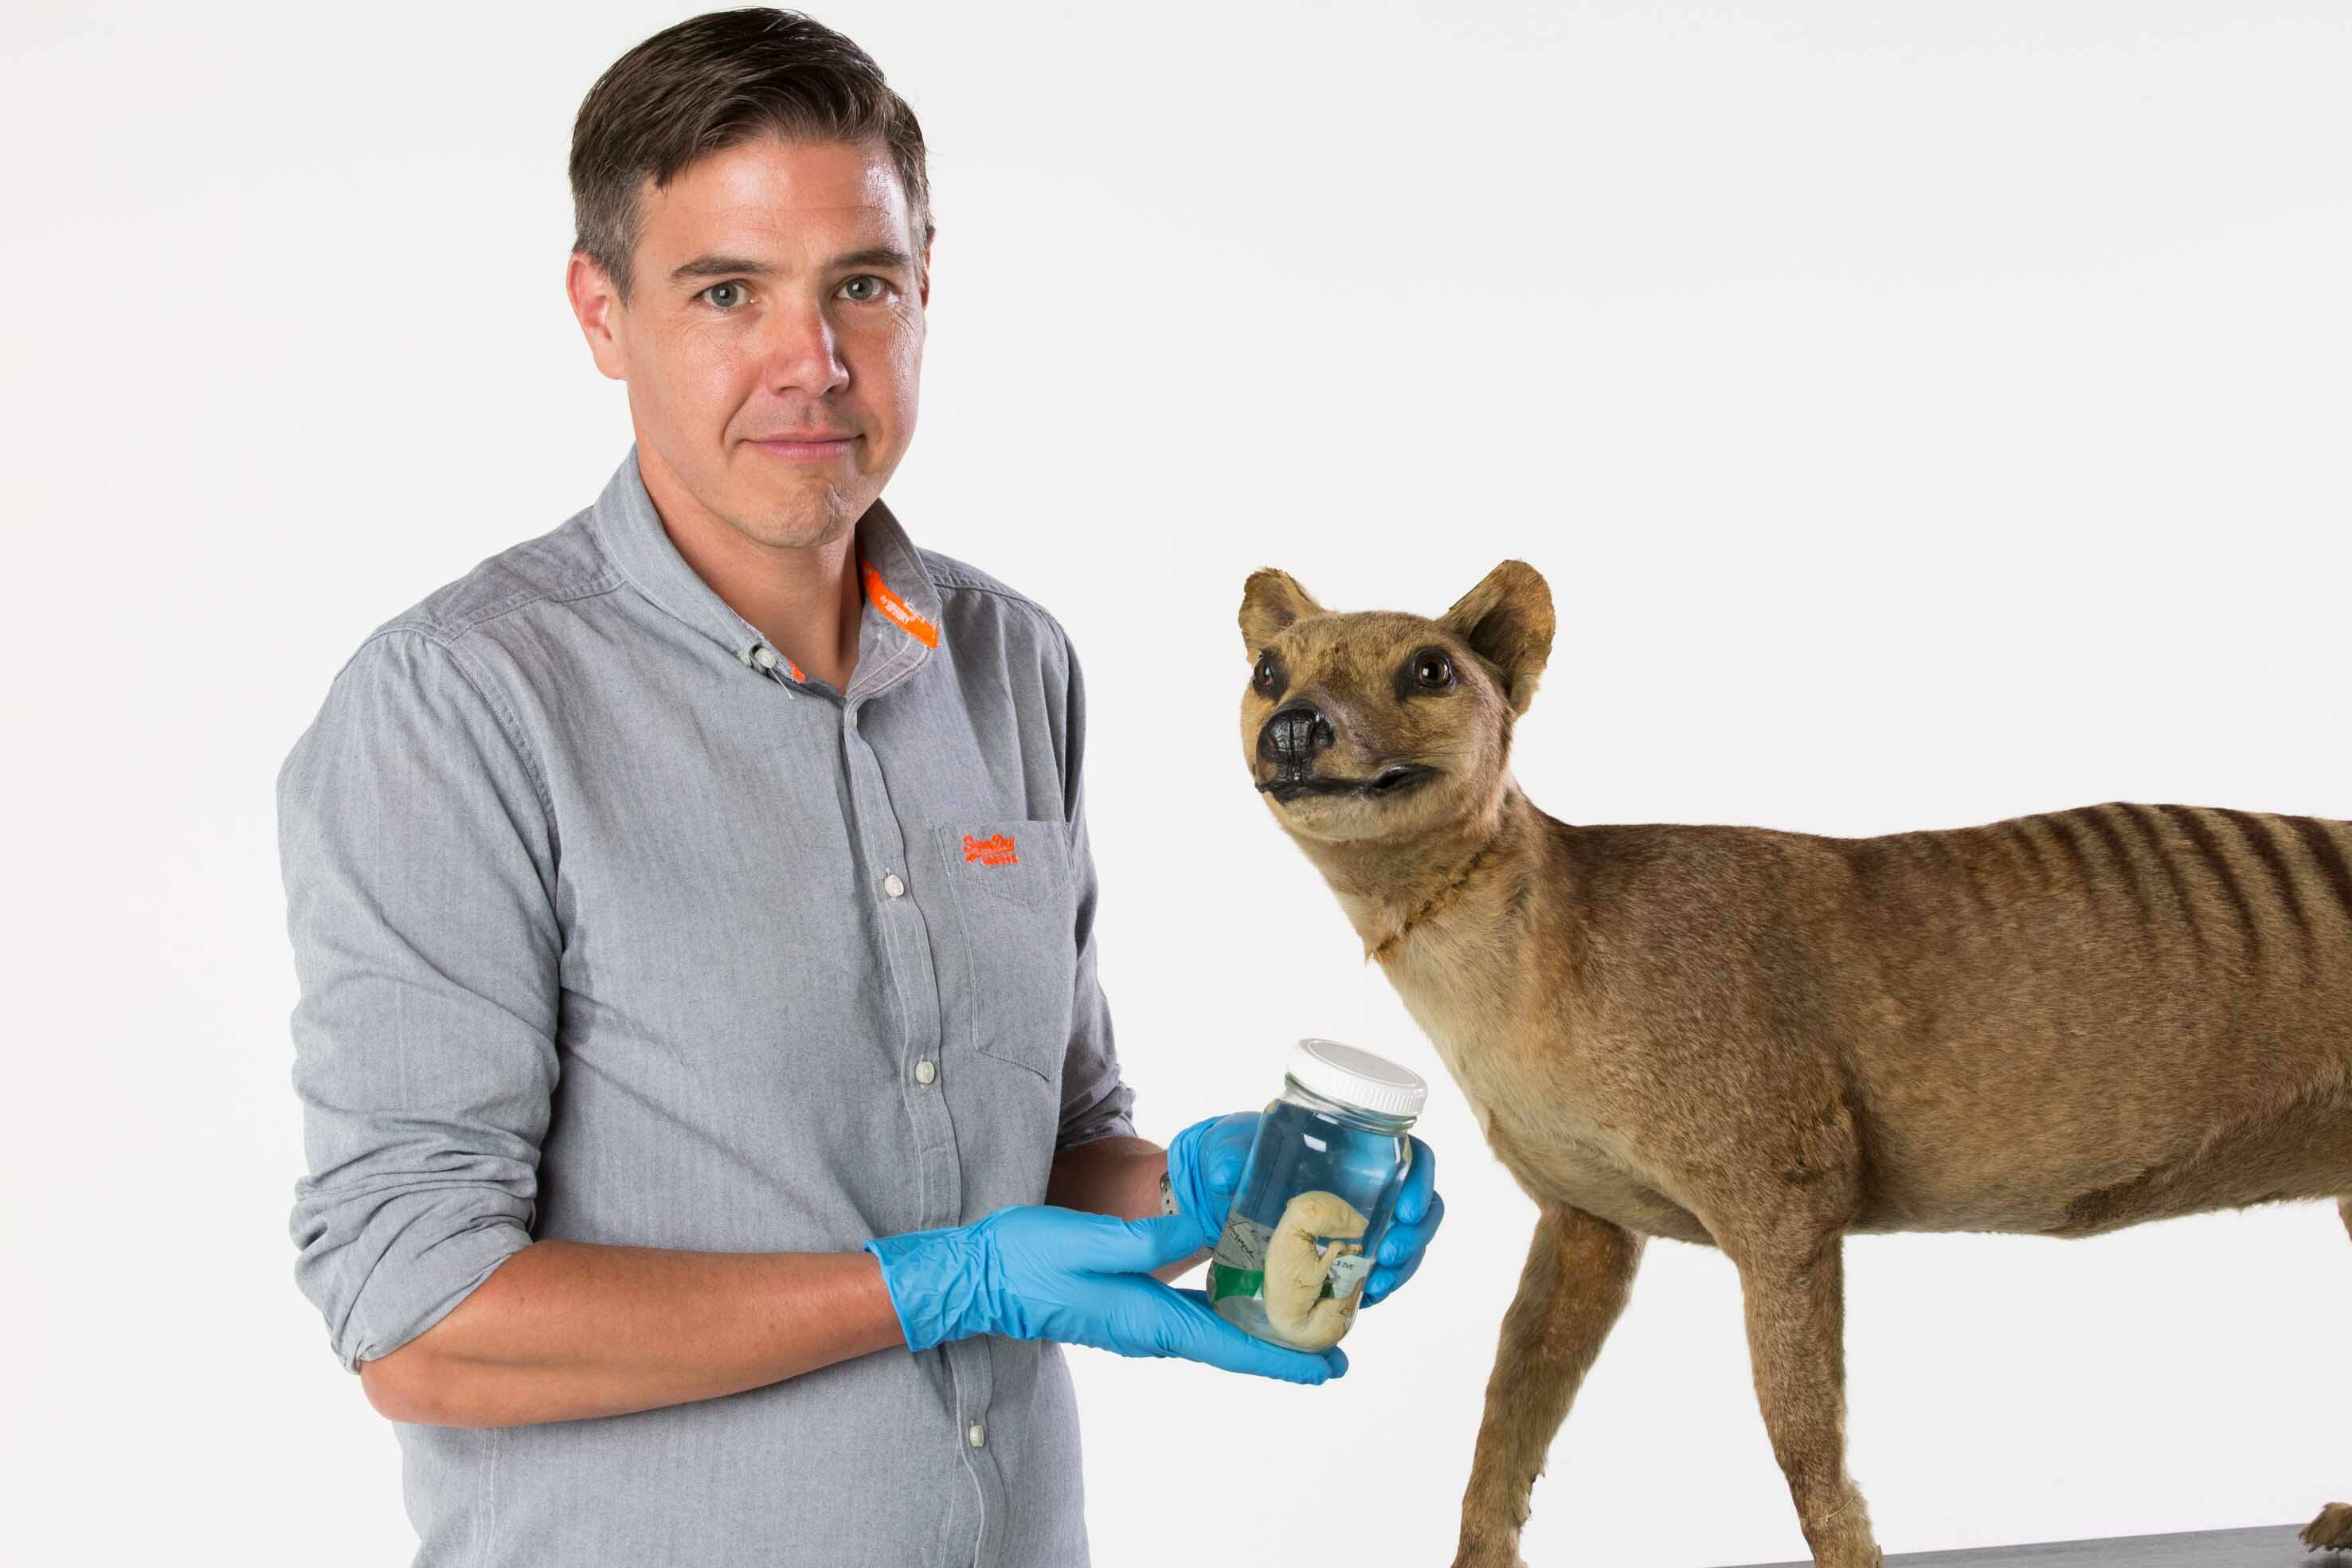 University of Melbourne professor Andrew Pask says Tasmanian tiger